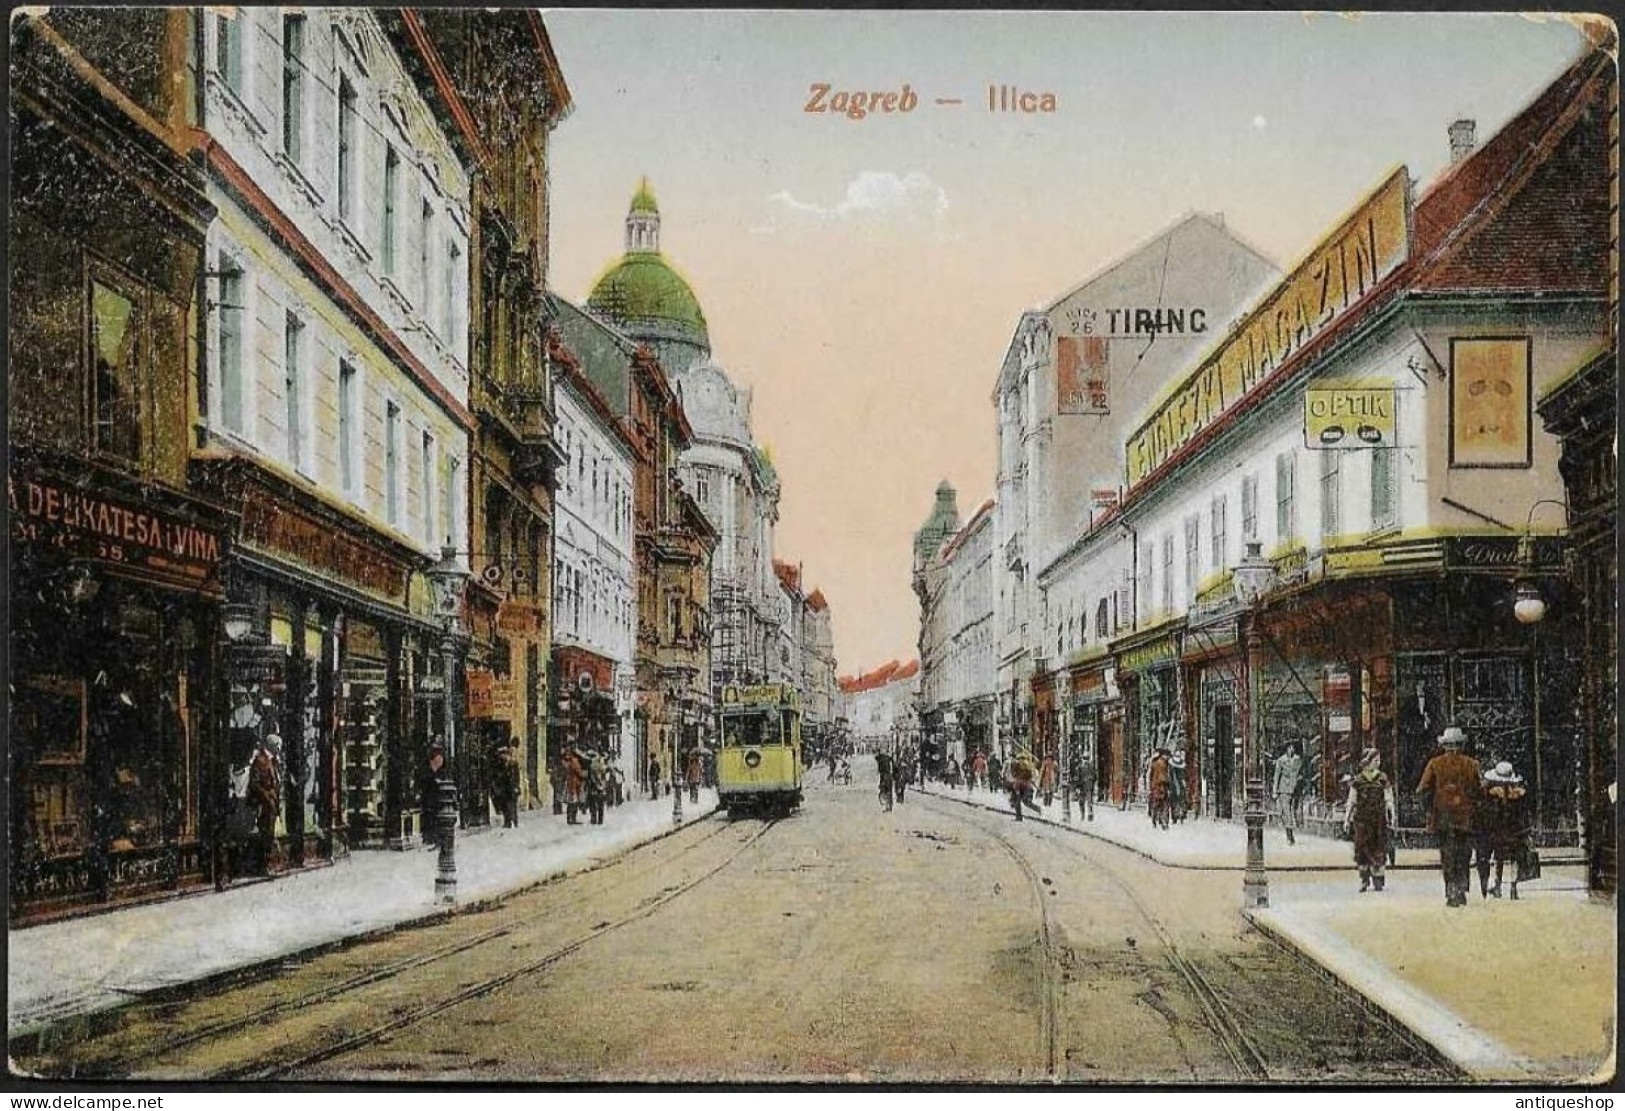 Croatia-----Zagreb-----old Postcard - Croatia